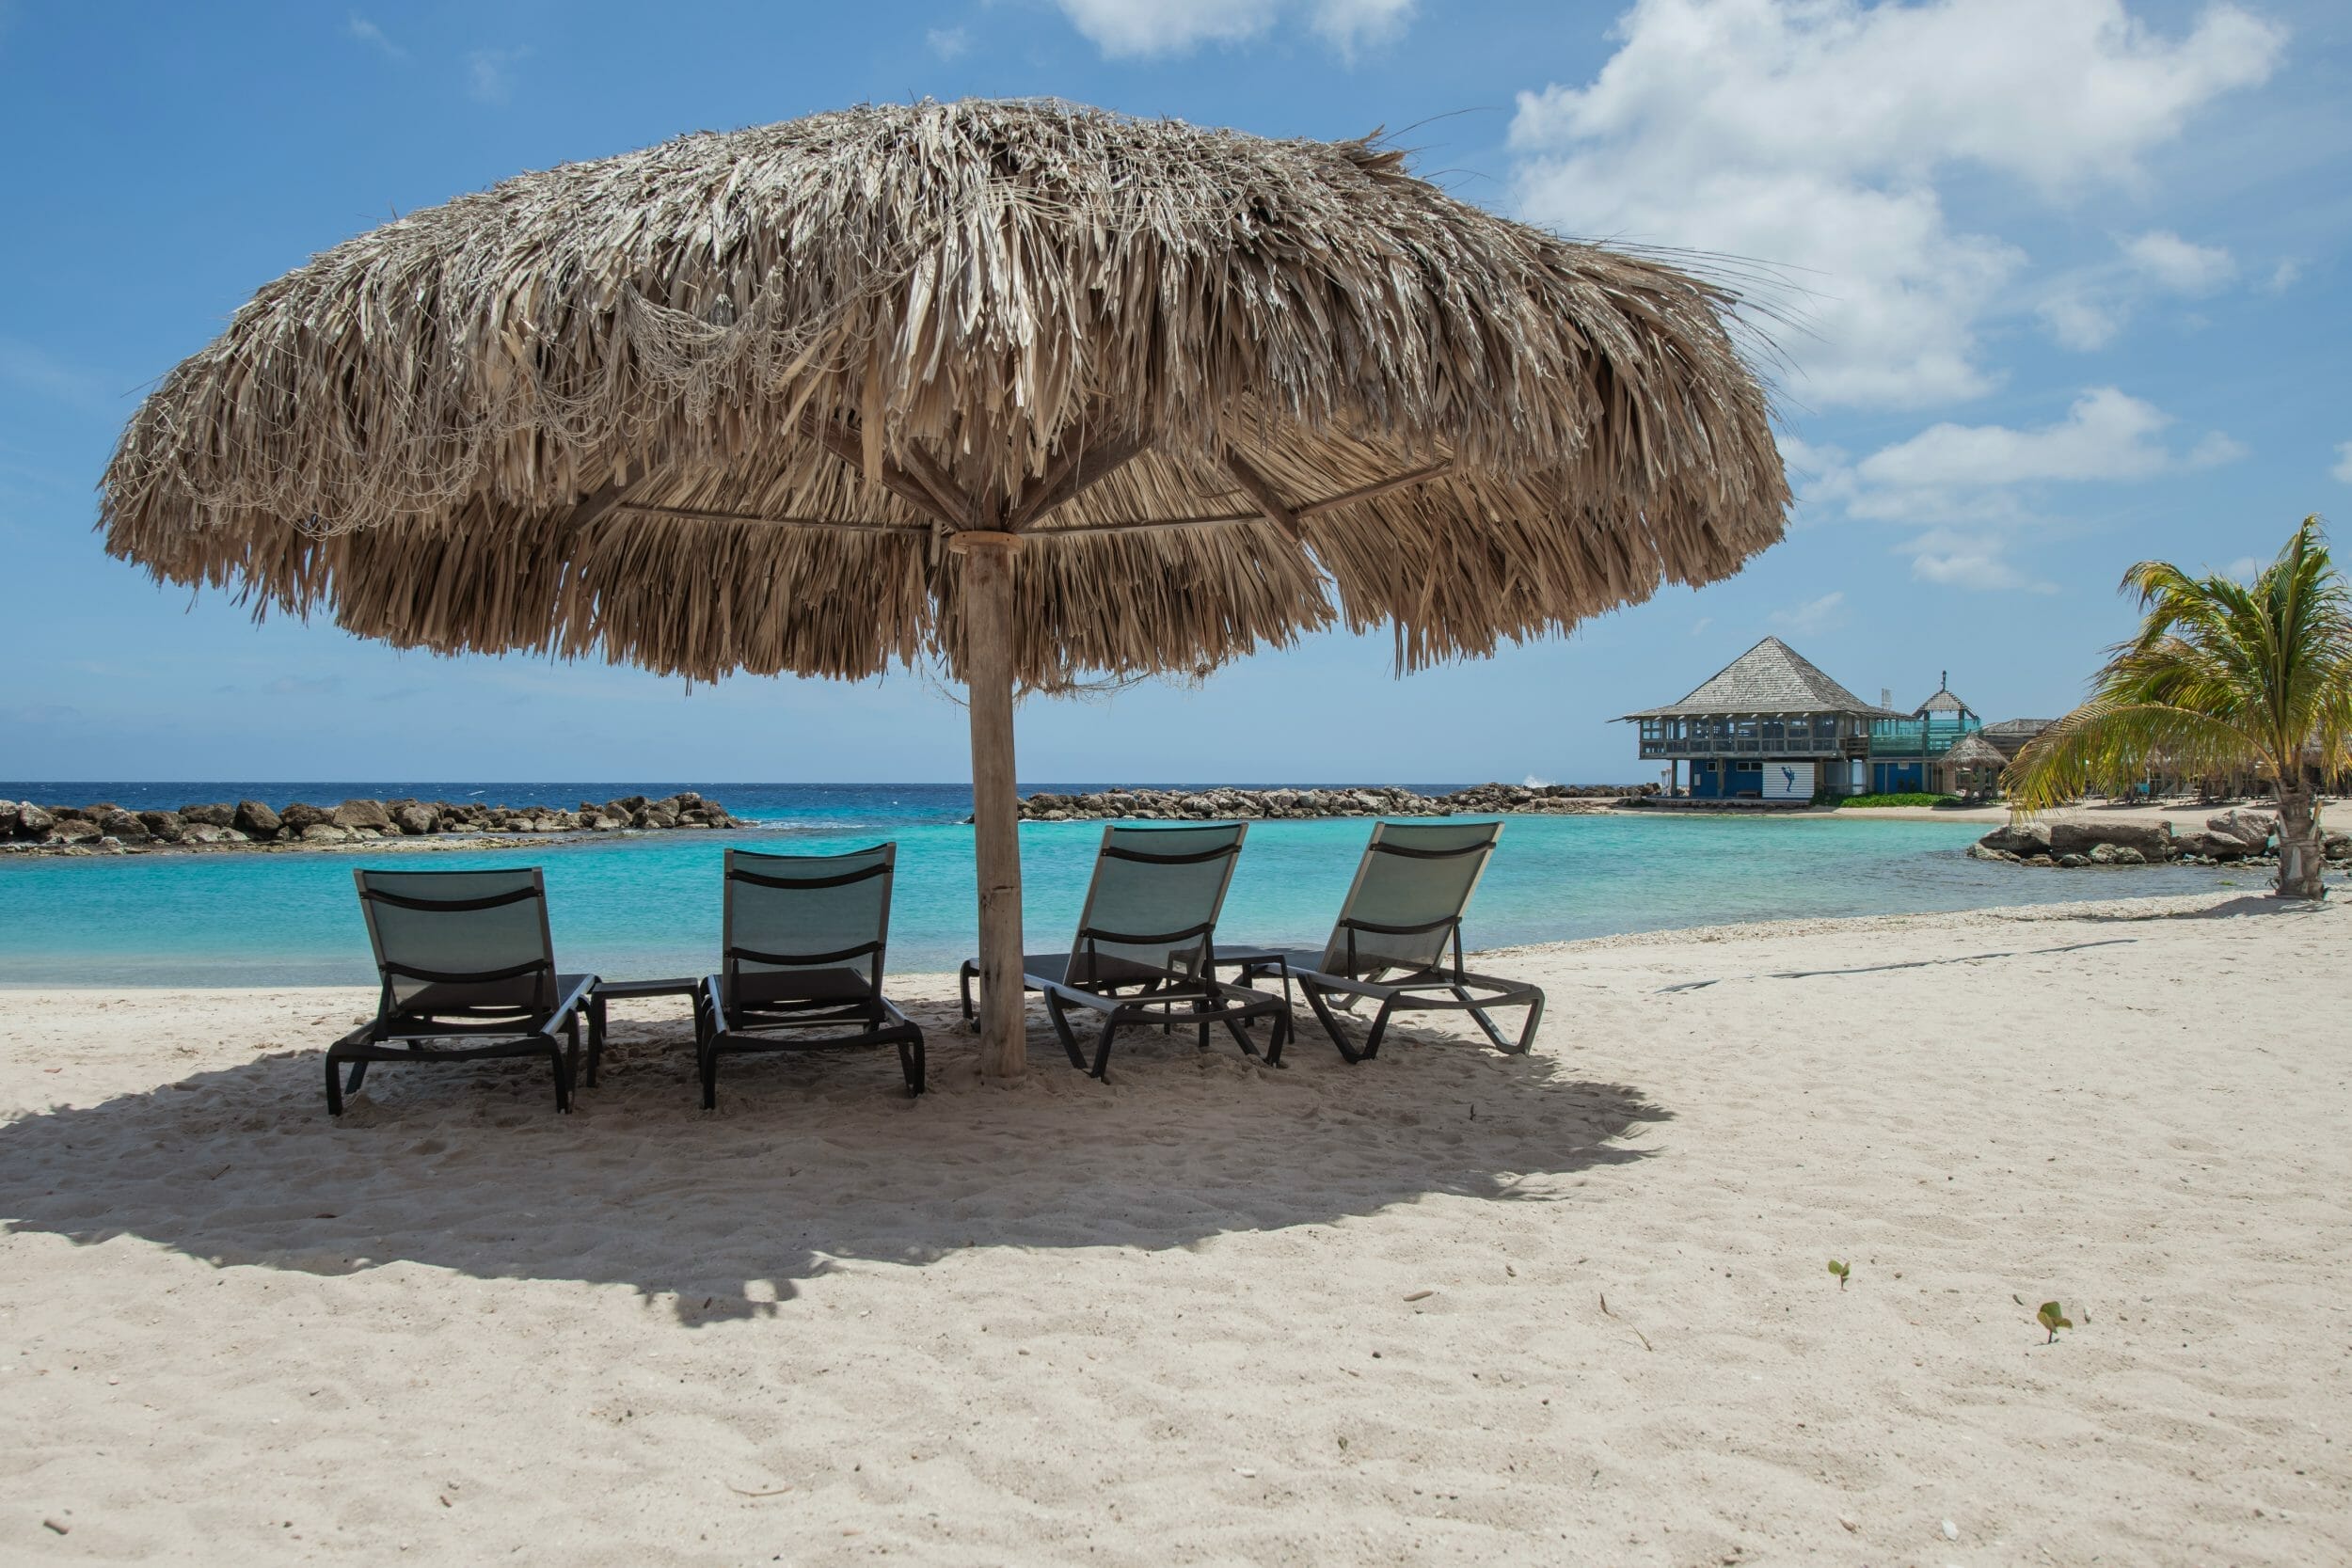 Avila Beach Hotel's Curacao beach - a must-visit destination